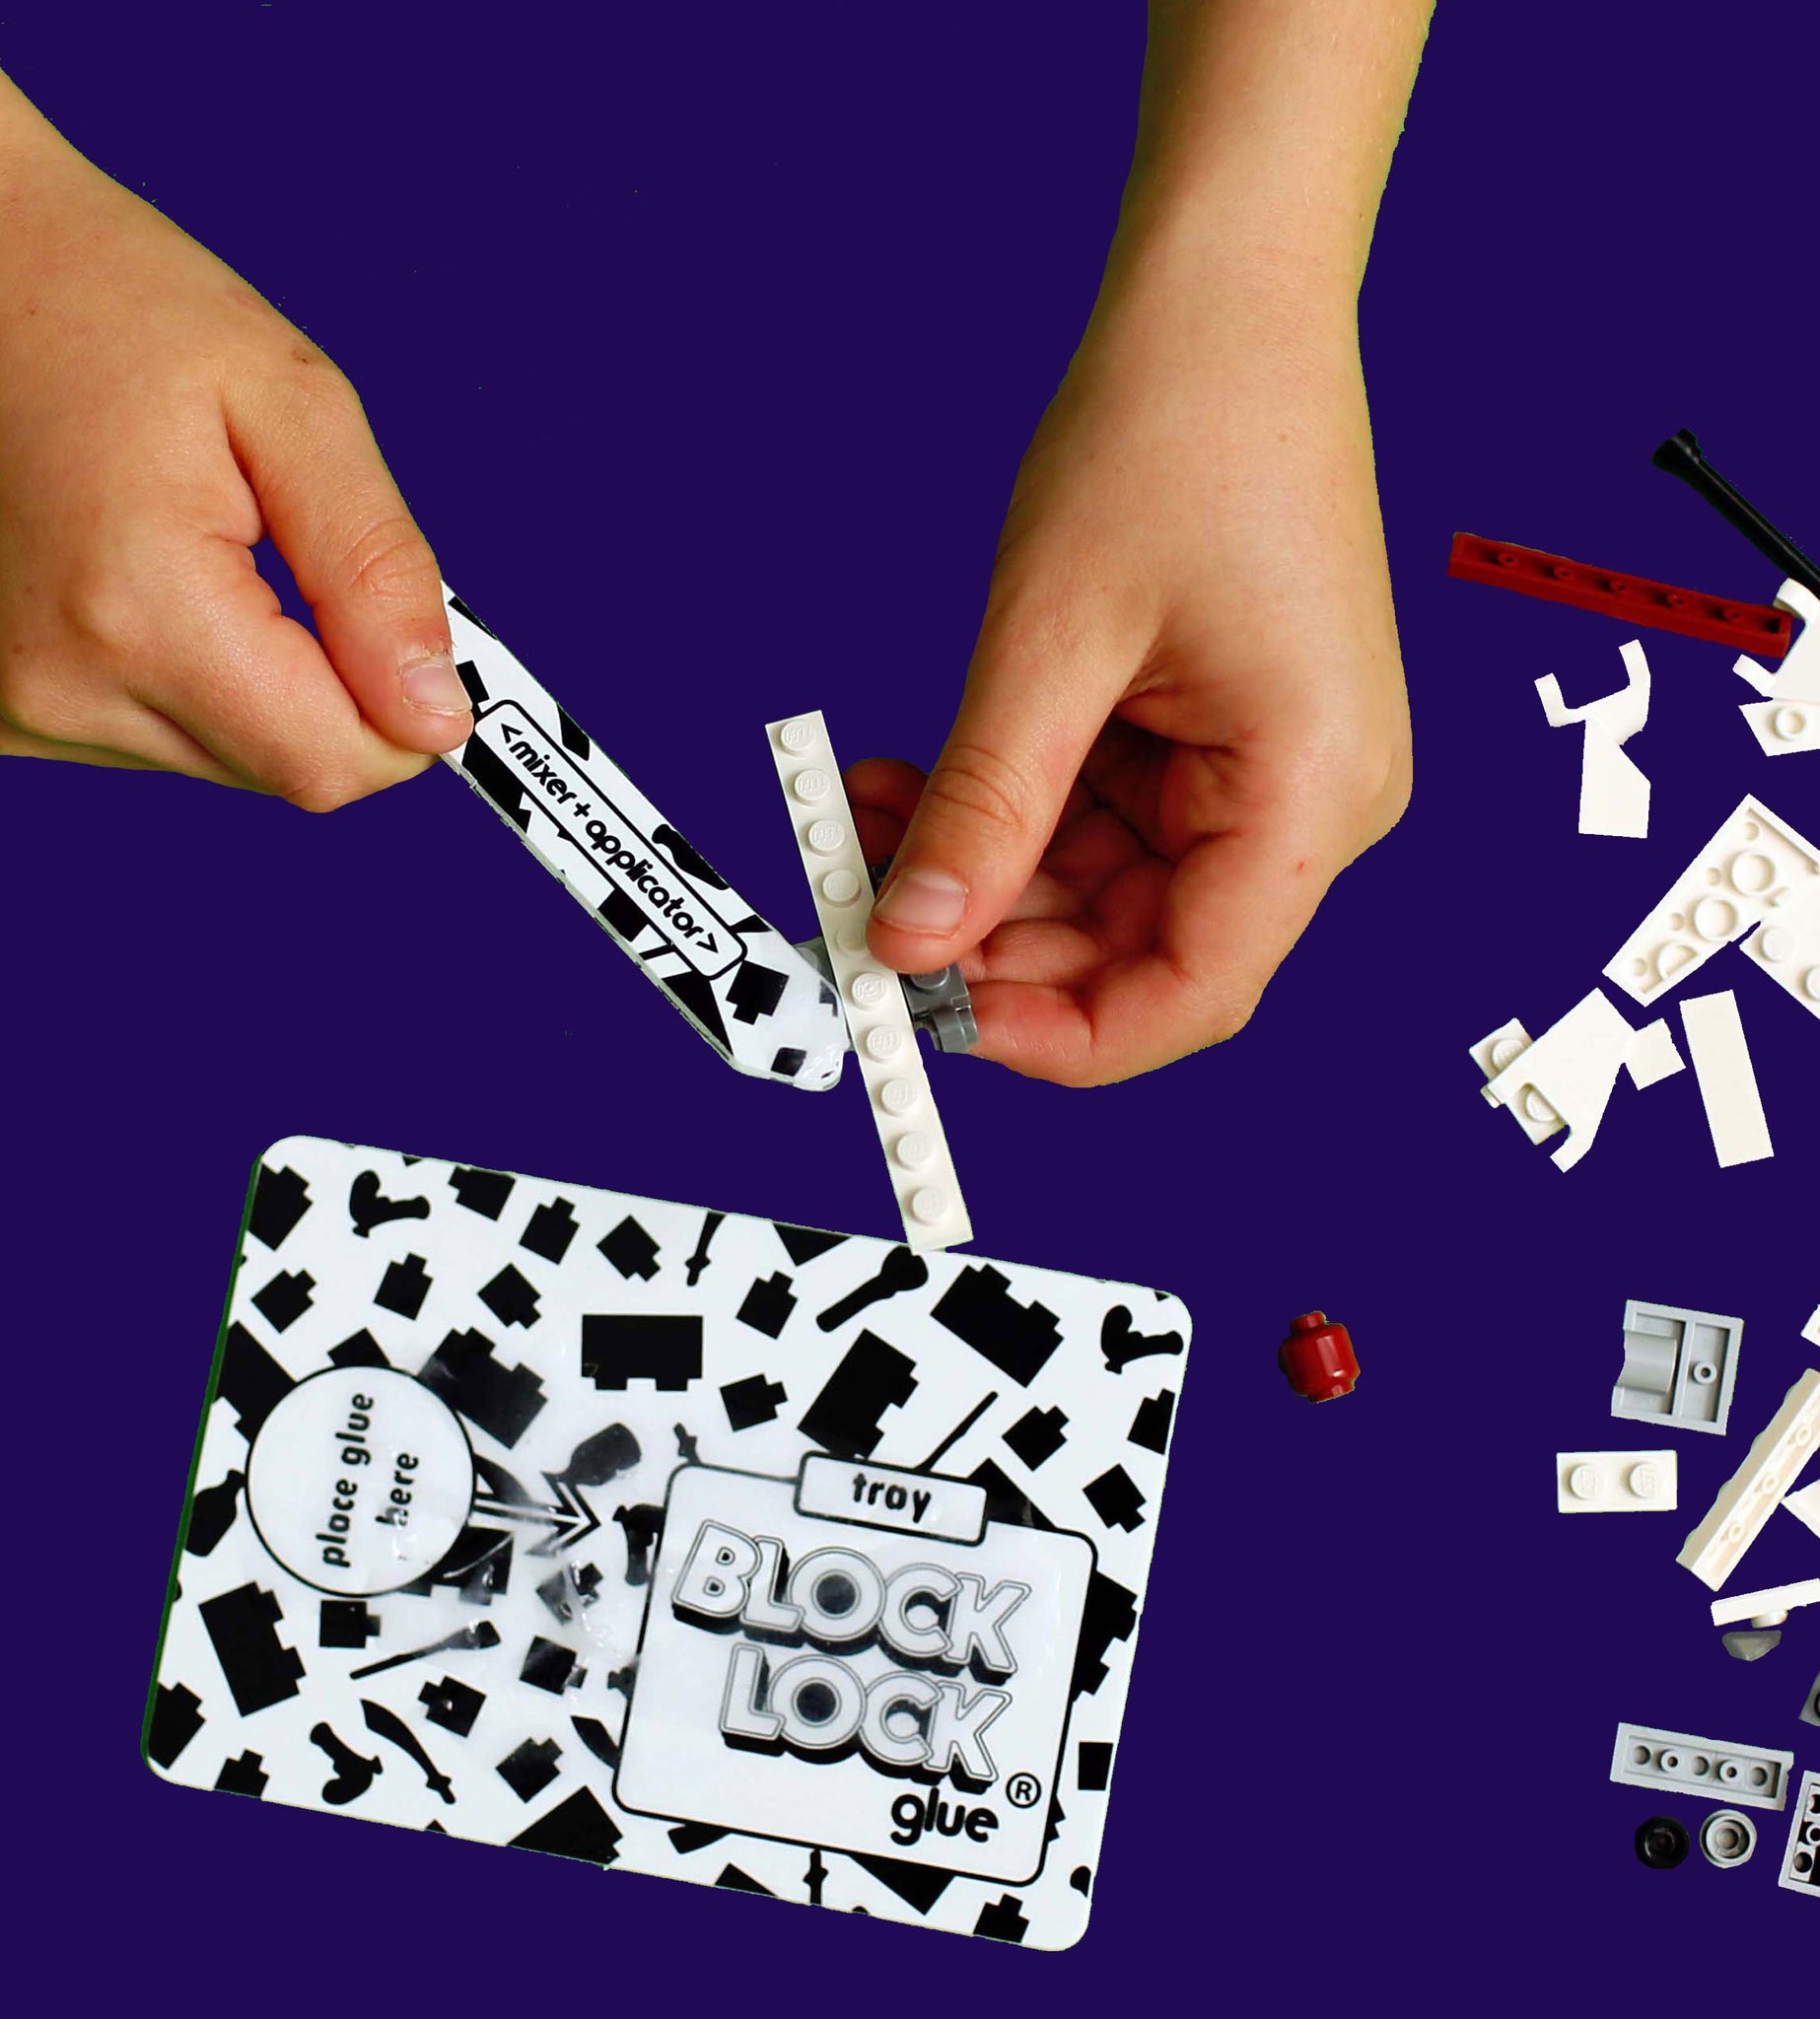 S-WASH Bag SANITISING WASH BAGS FOR LEGO toy brick set kits – BLOCK LOCK  Toy Glue